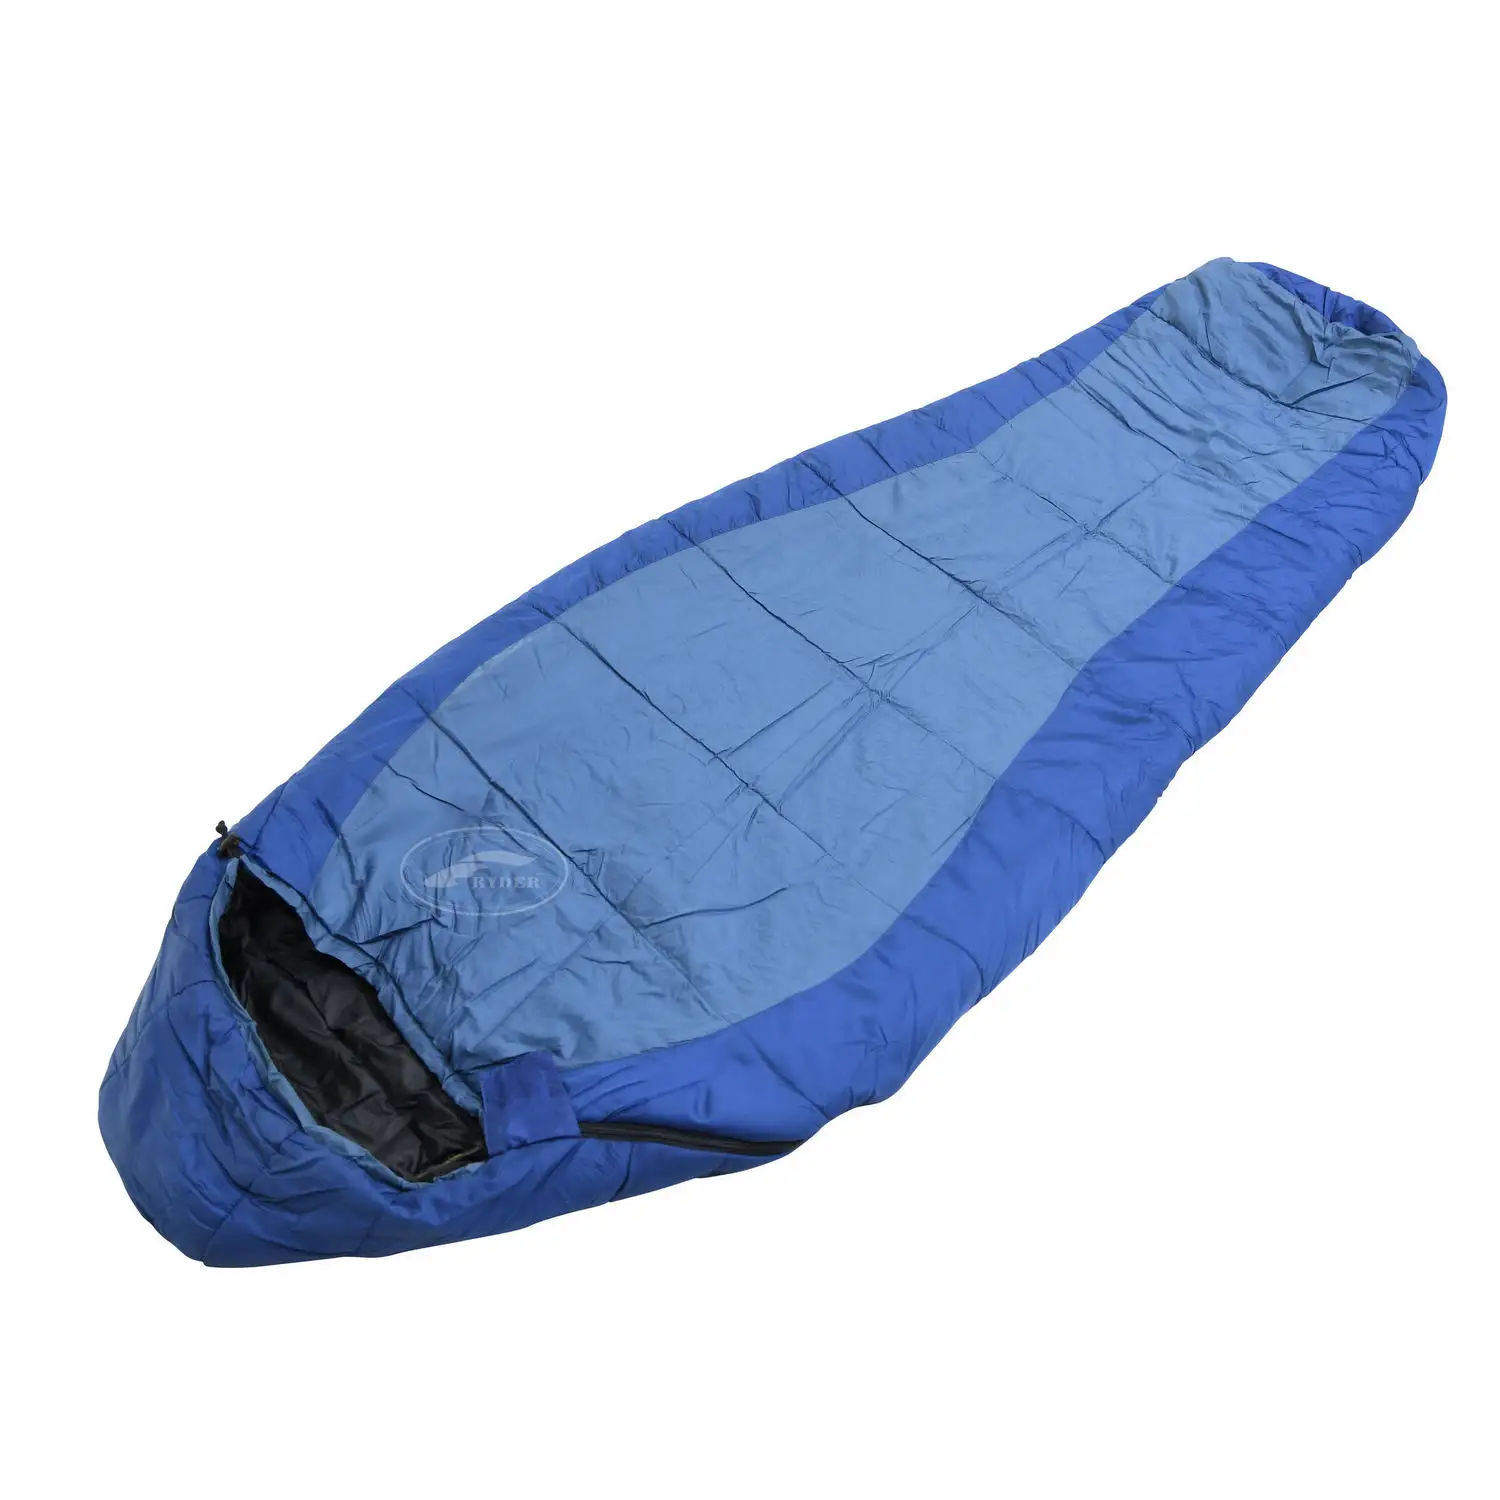 Custom Labelling Camping Backpacker Anti-Snag Mummy 0 Degree Survival Thermal Sleeping Bag with Zip Baffle 3 Season